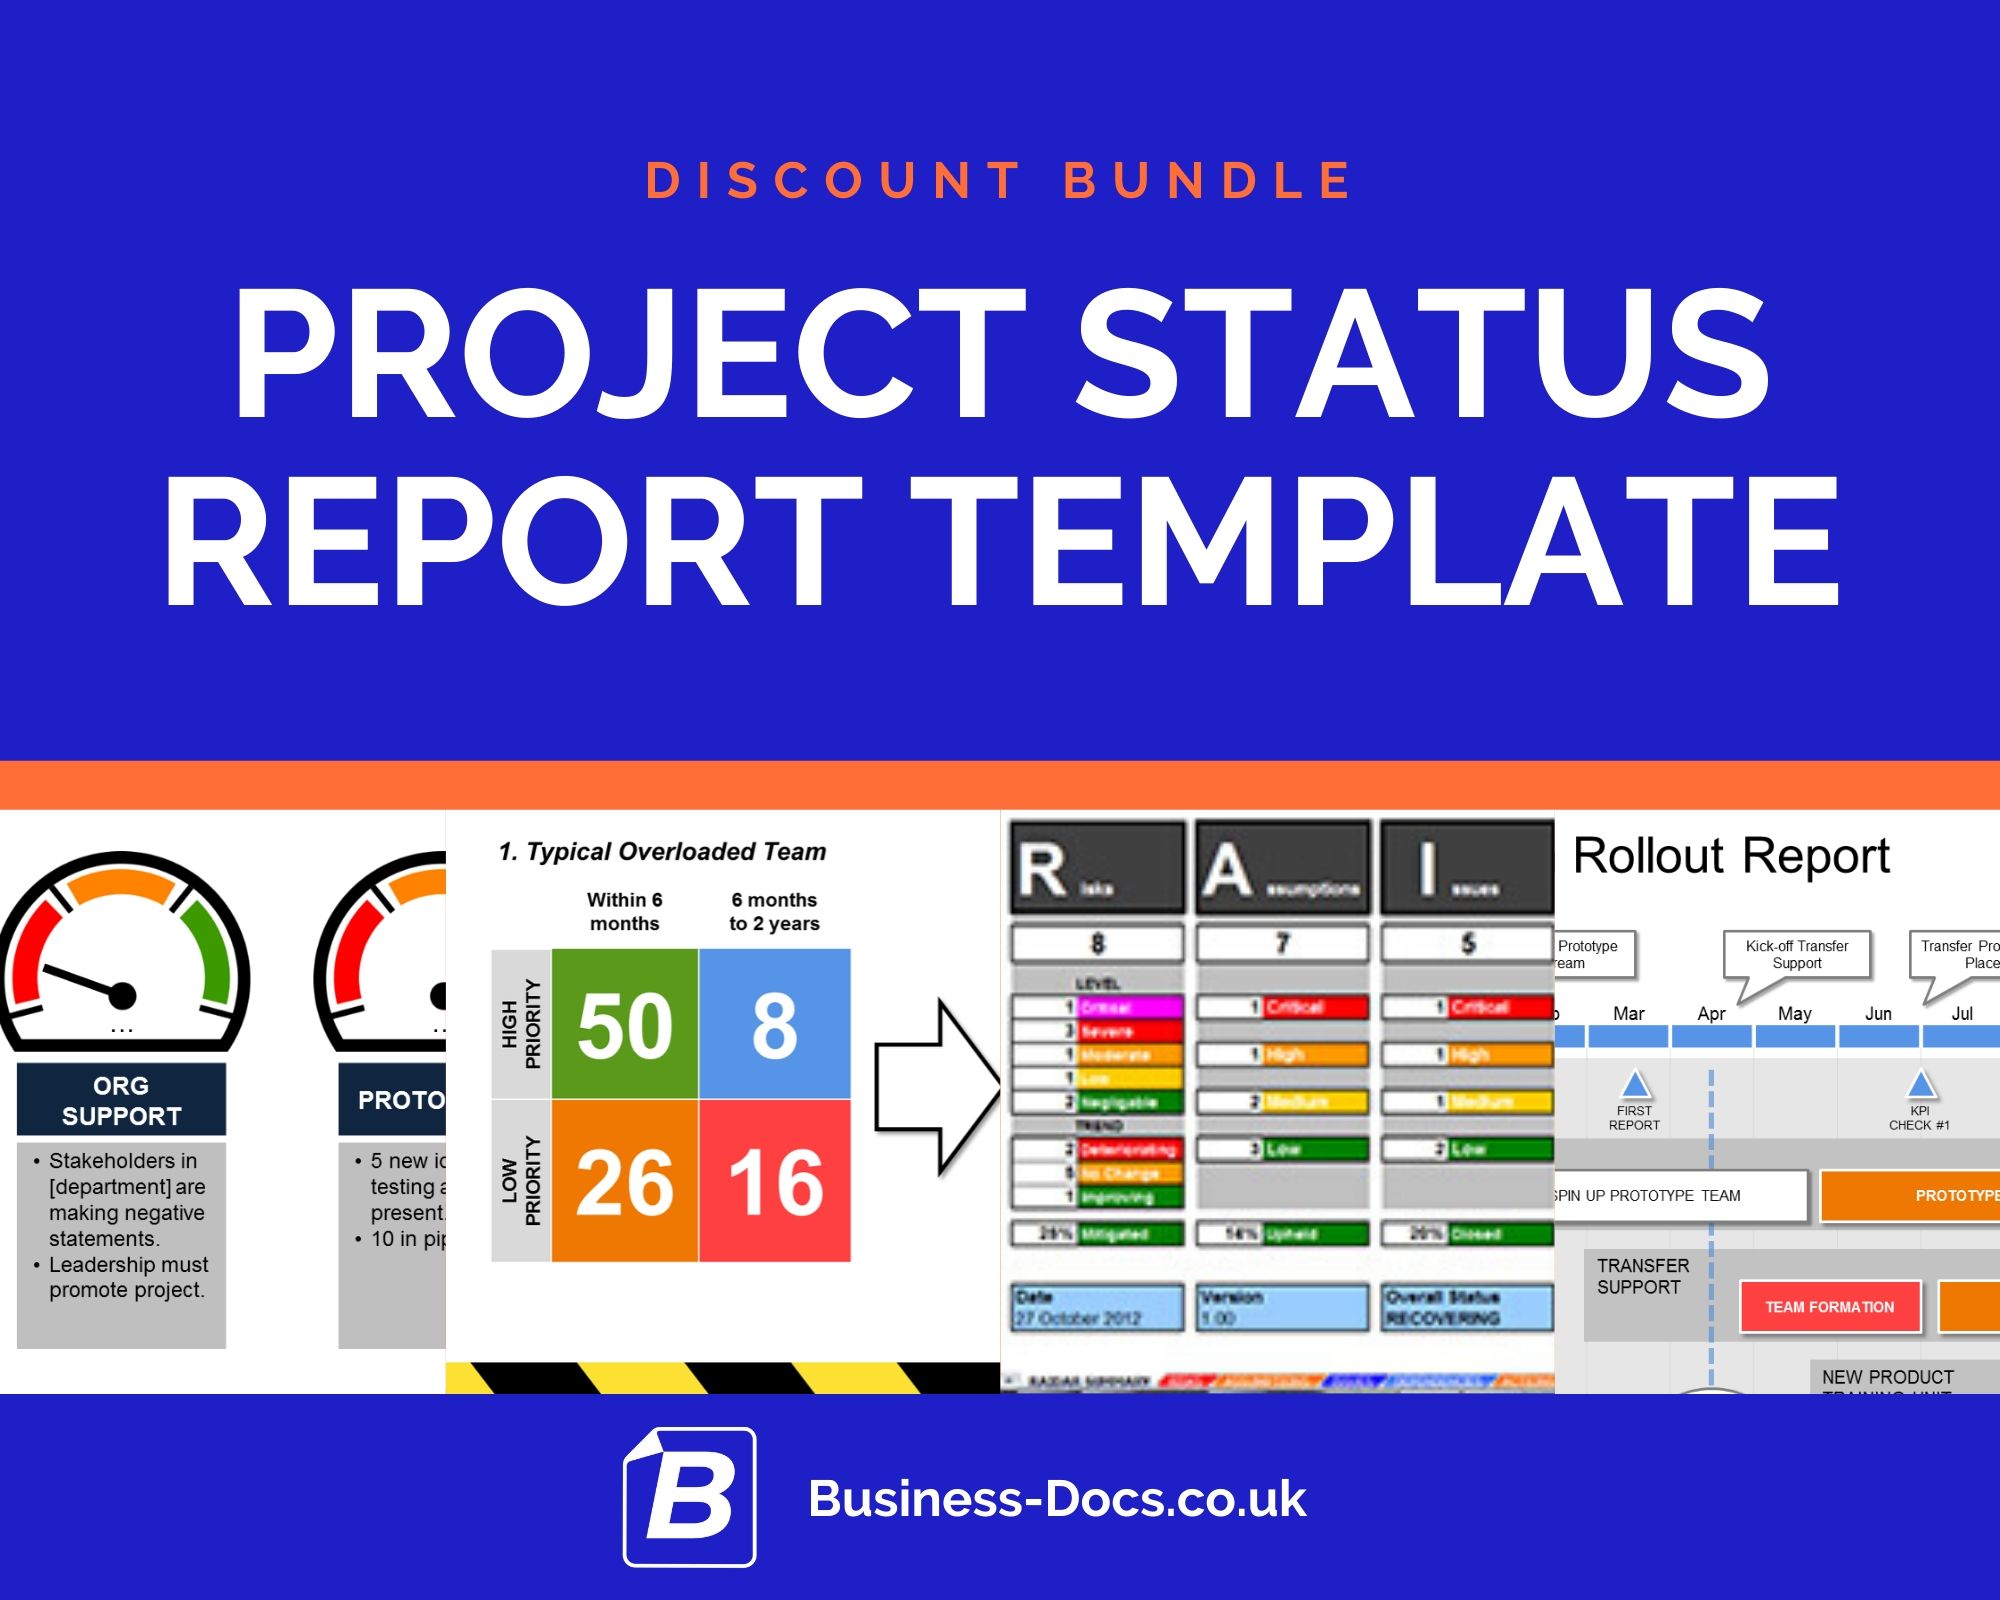 BDUK-21900-Project-Status-Report-Template-Discount-Bundle-01